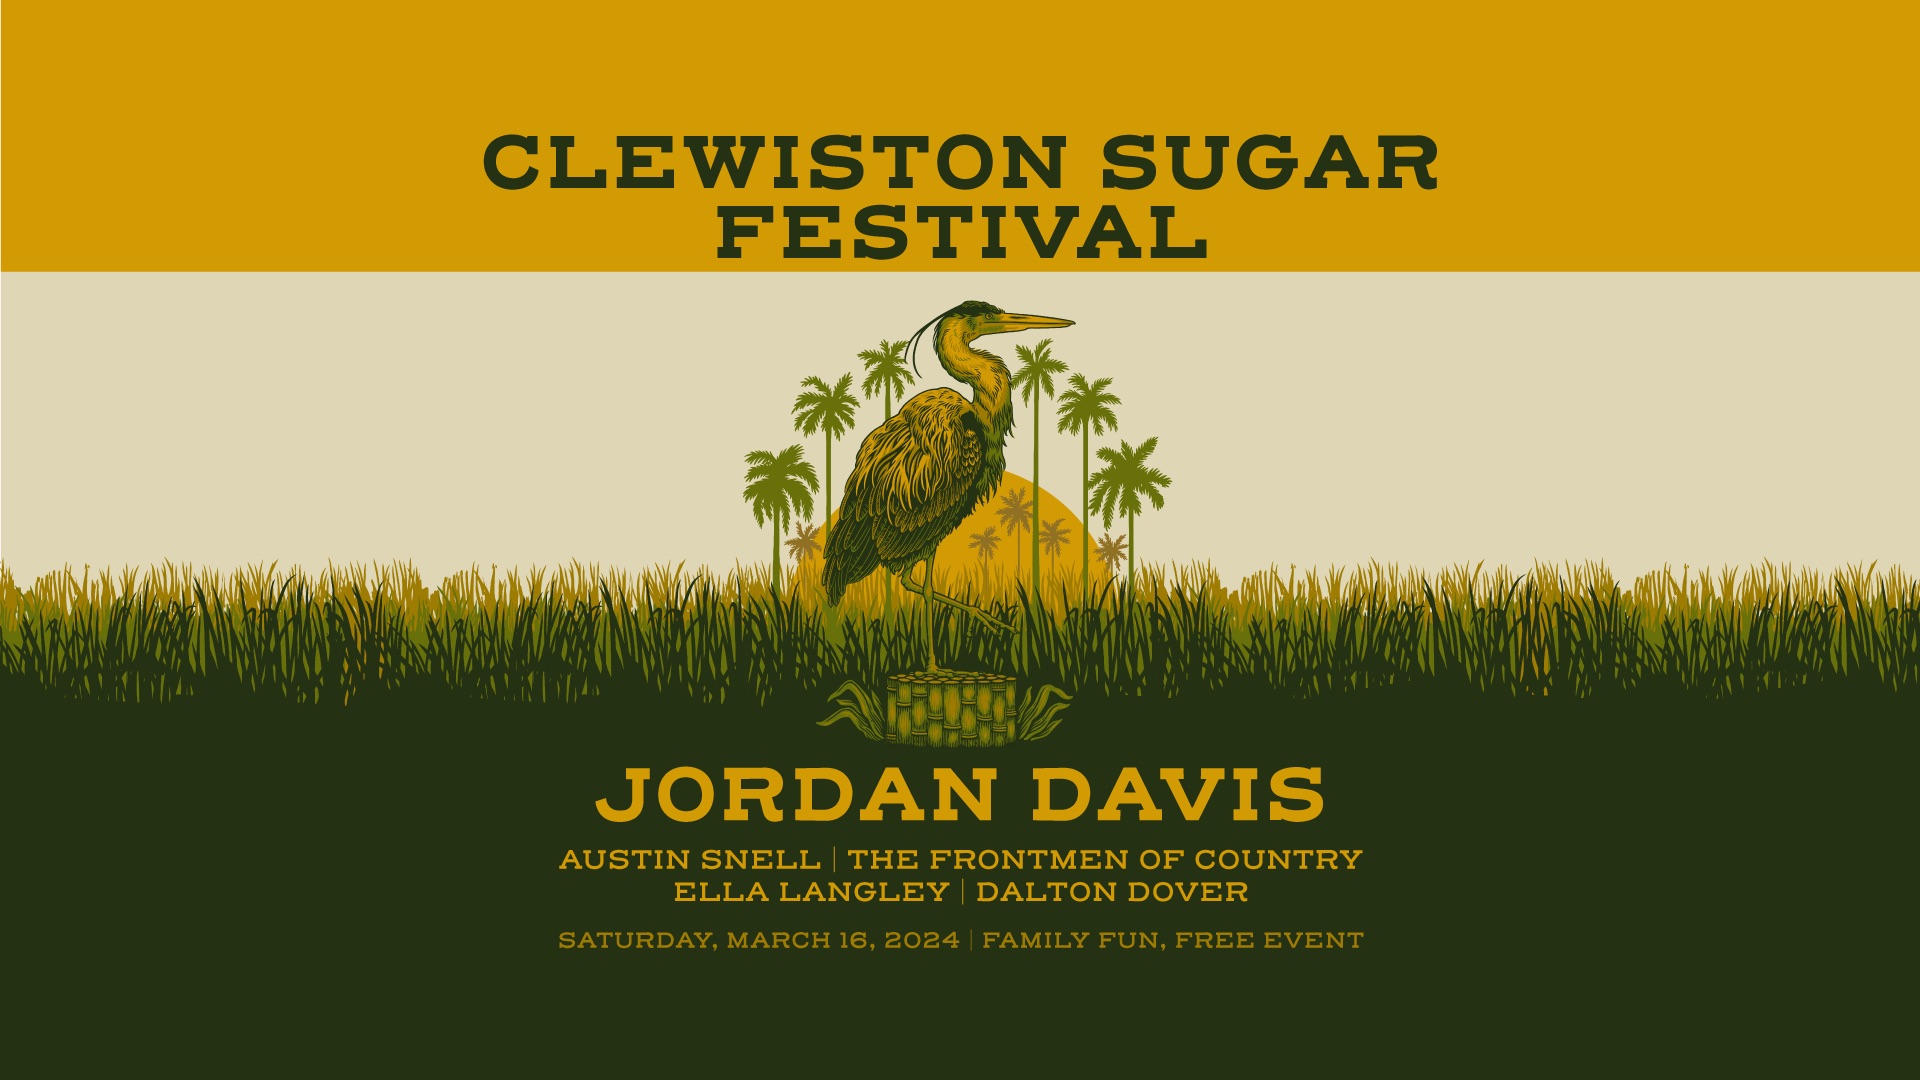 Clewiston Sugar Festival - Clewiston